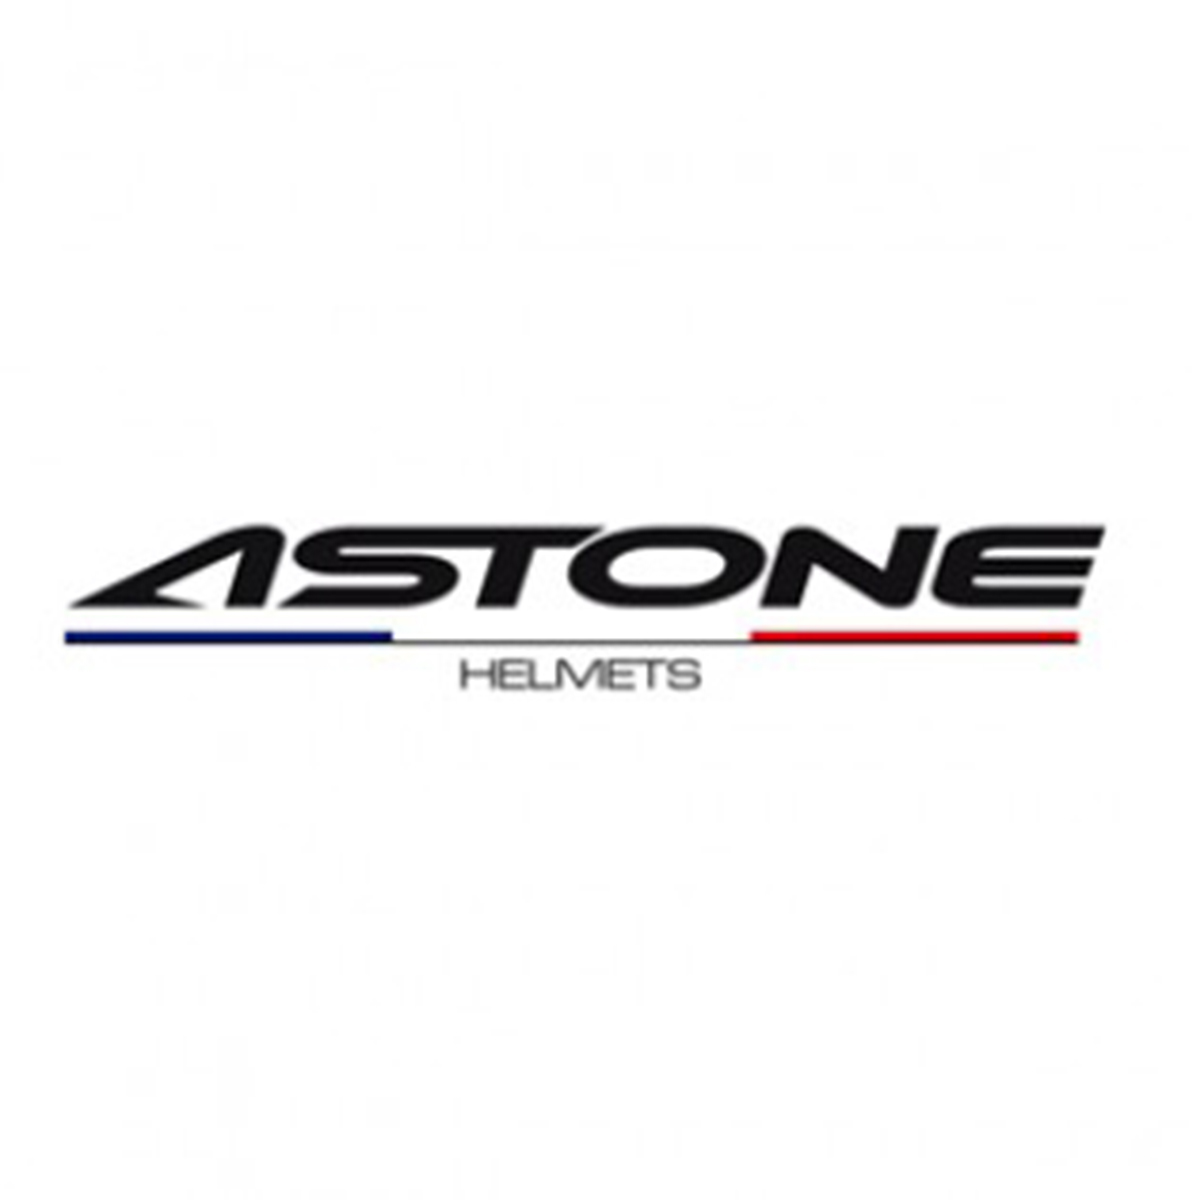 astone helmets 600x315 1